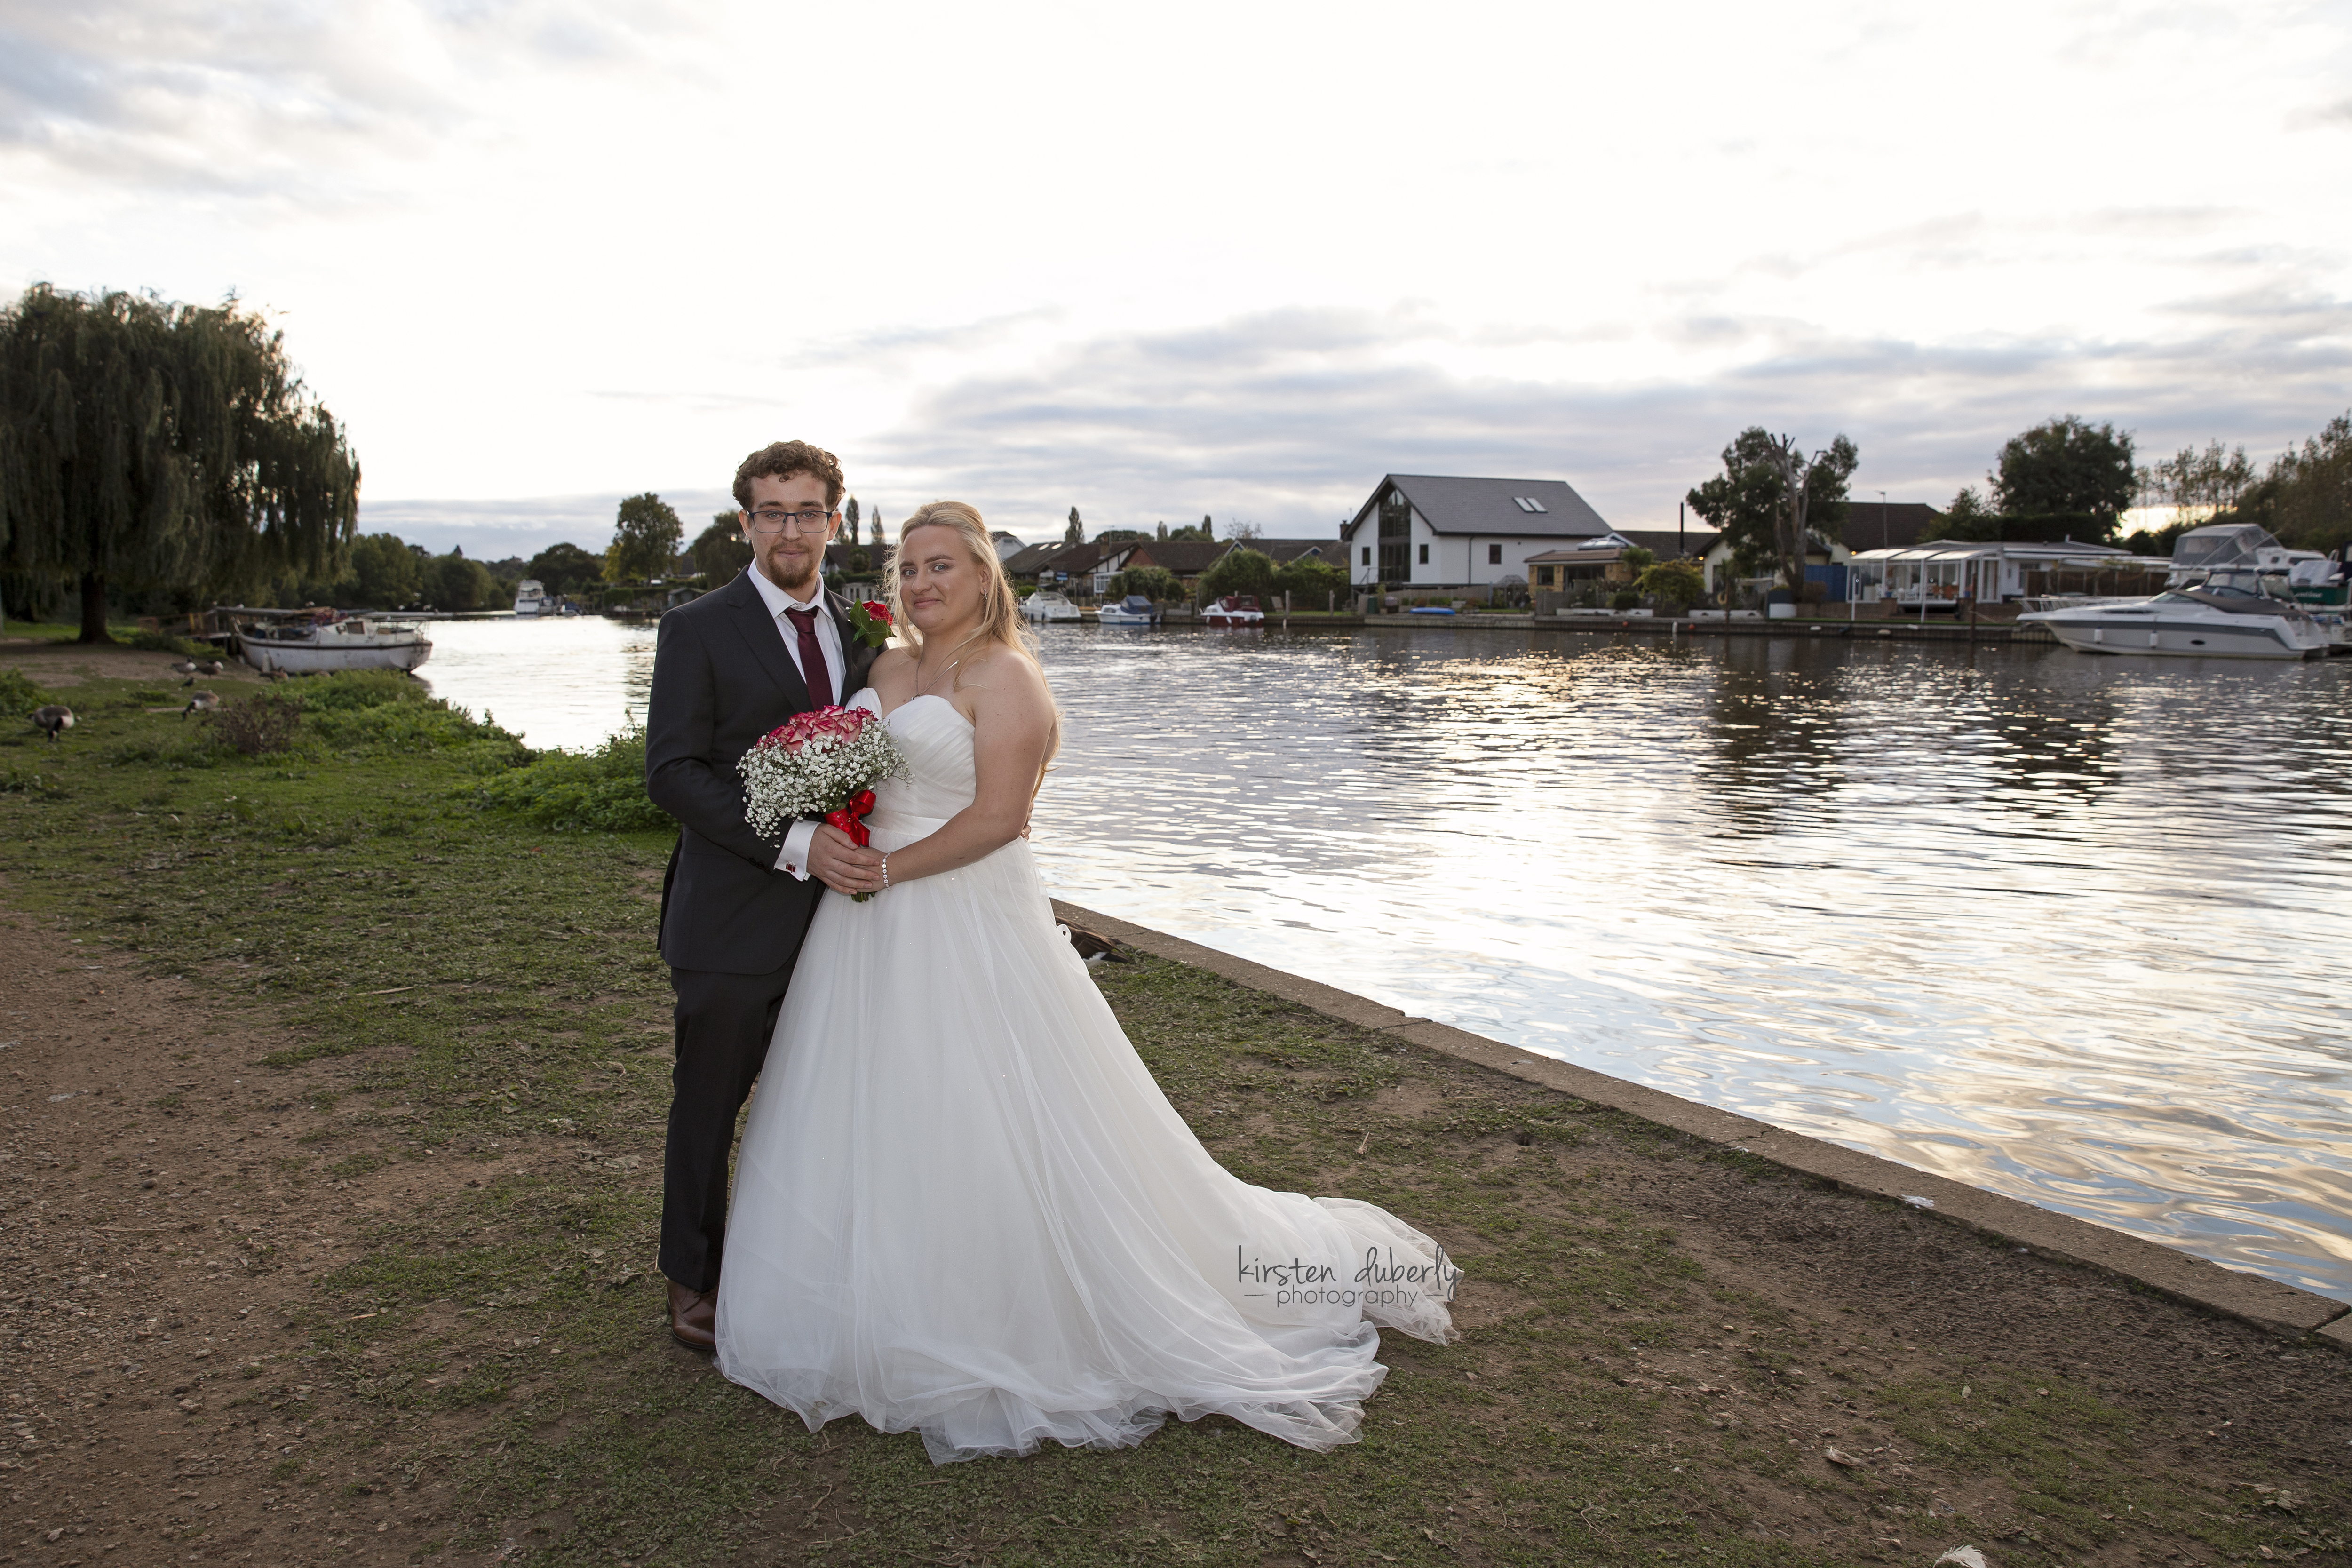 Wedding couple near Weybridge River. Copyright Kirsten Duberly Photography